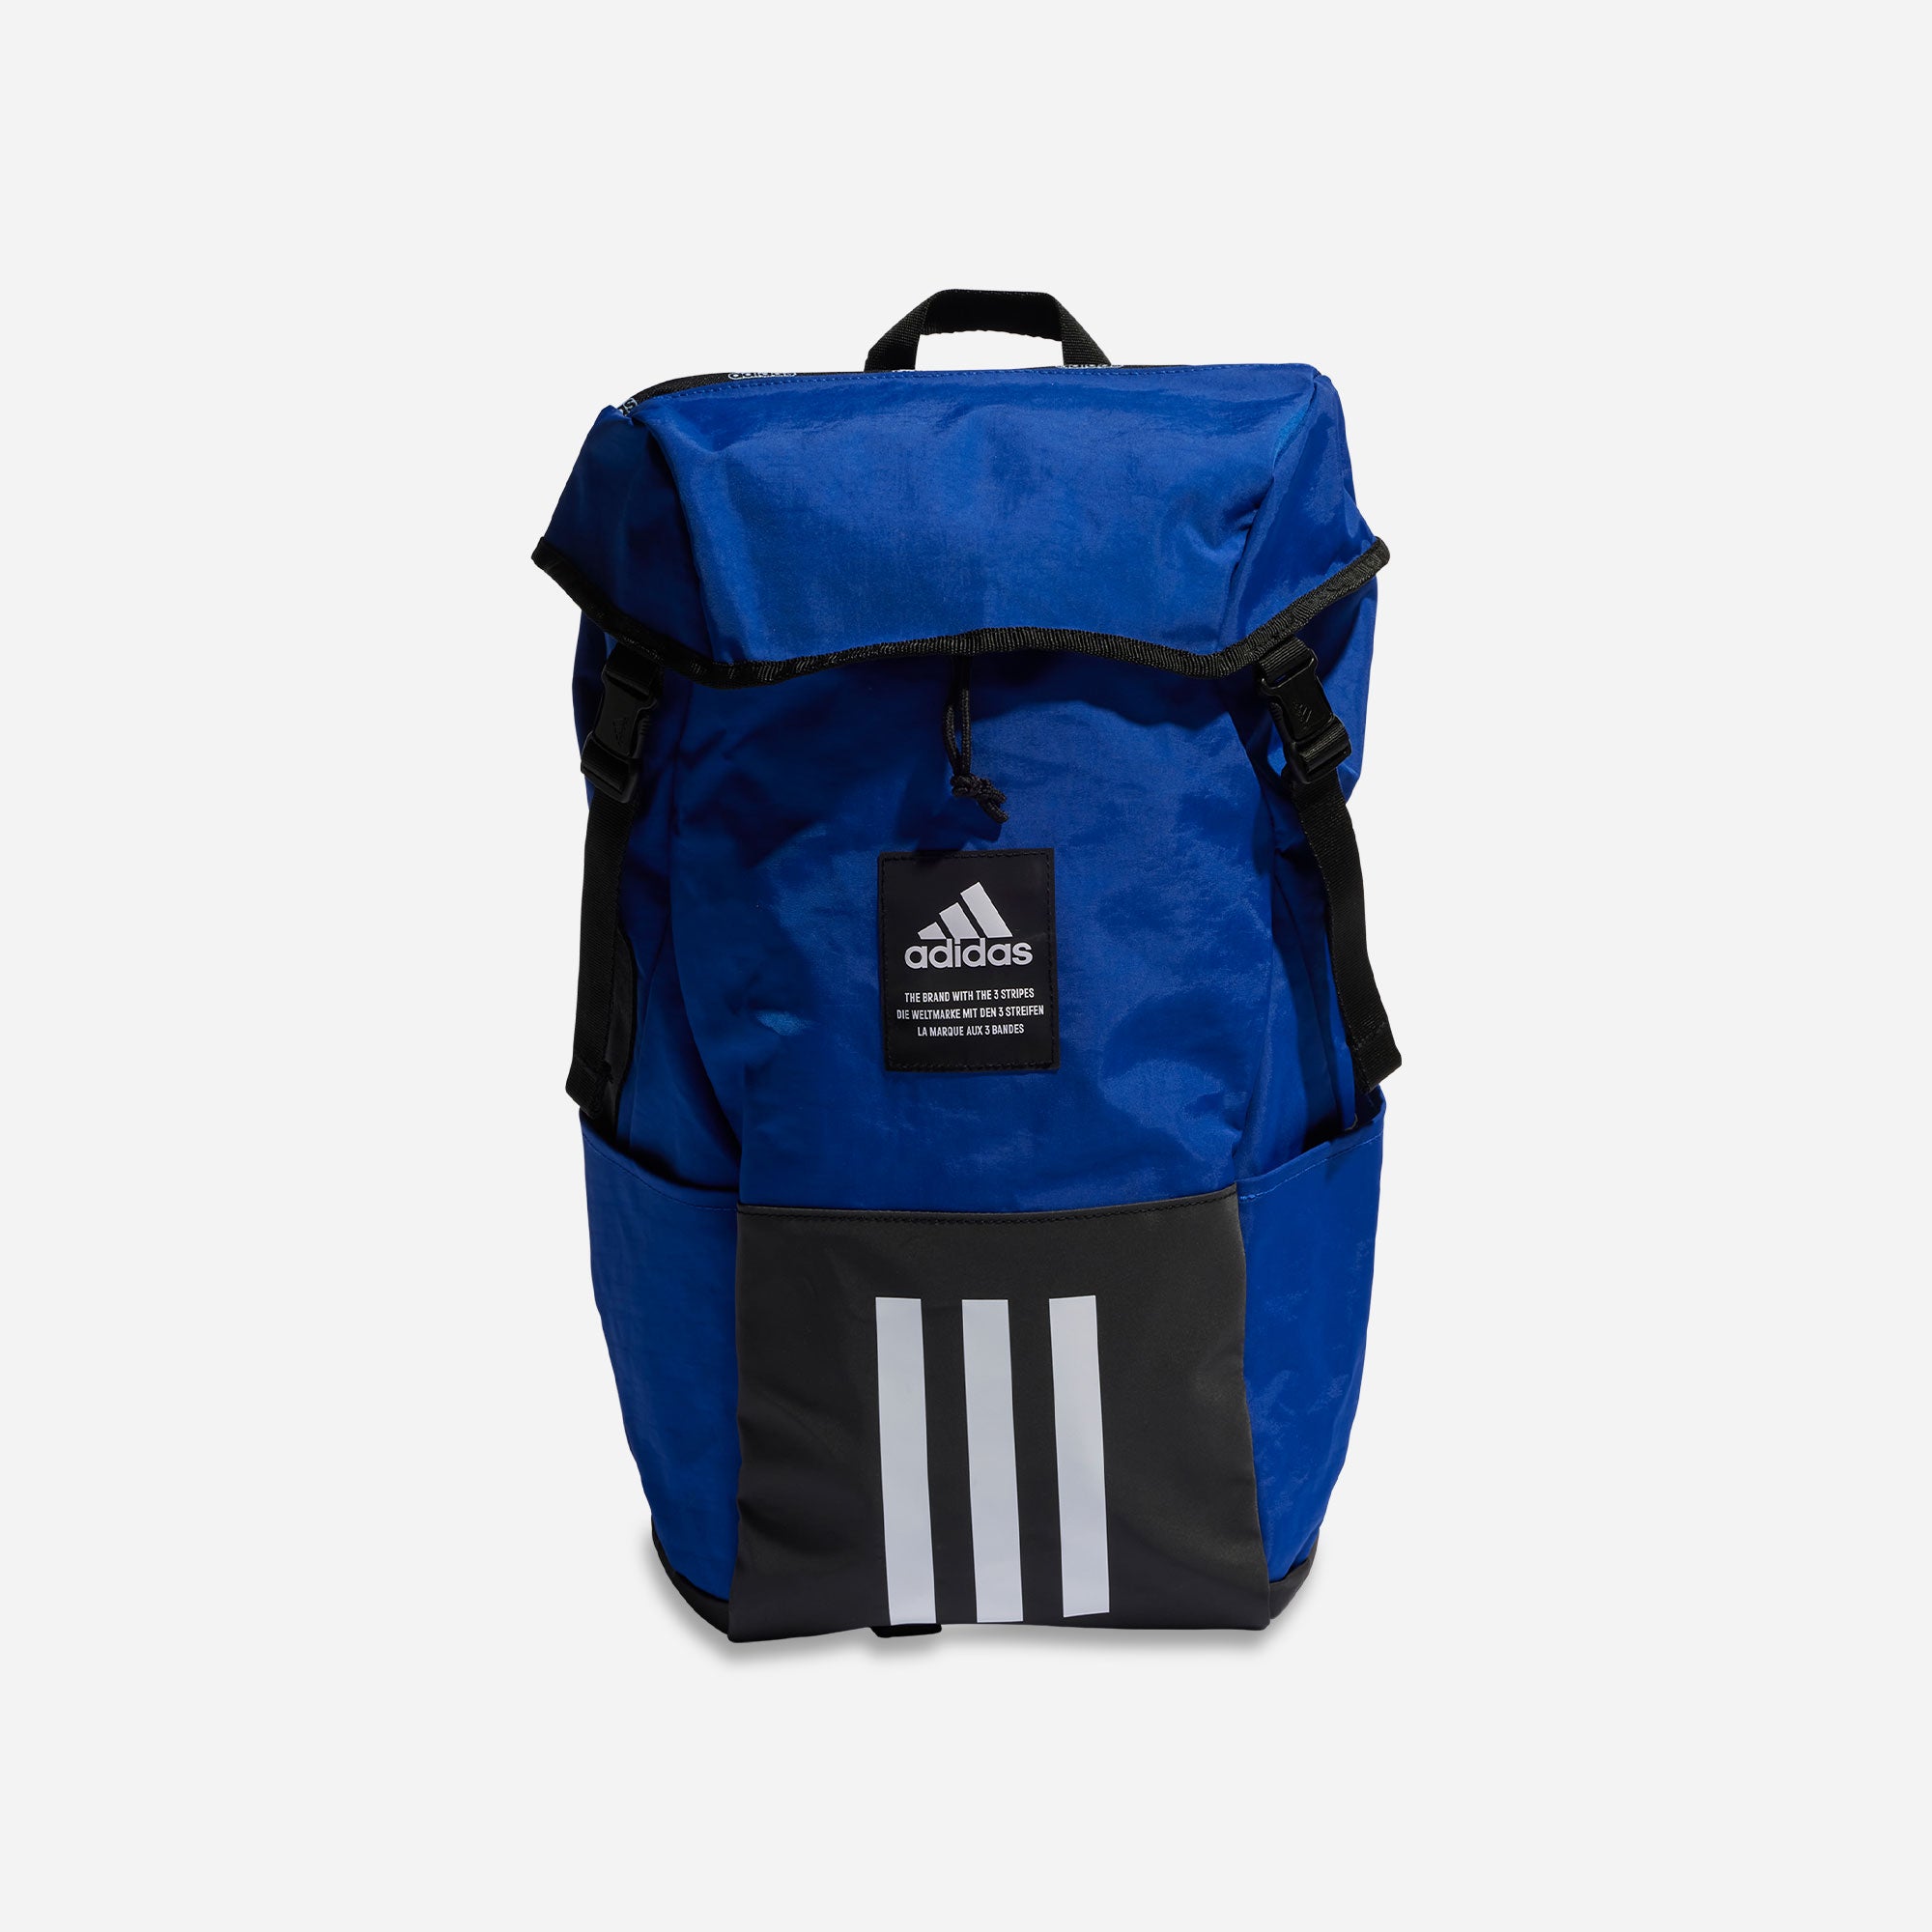 adidas Originals Classic School-Work-Travel-Gym-Sports Shoulder bags  Backpacks | eBay